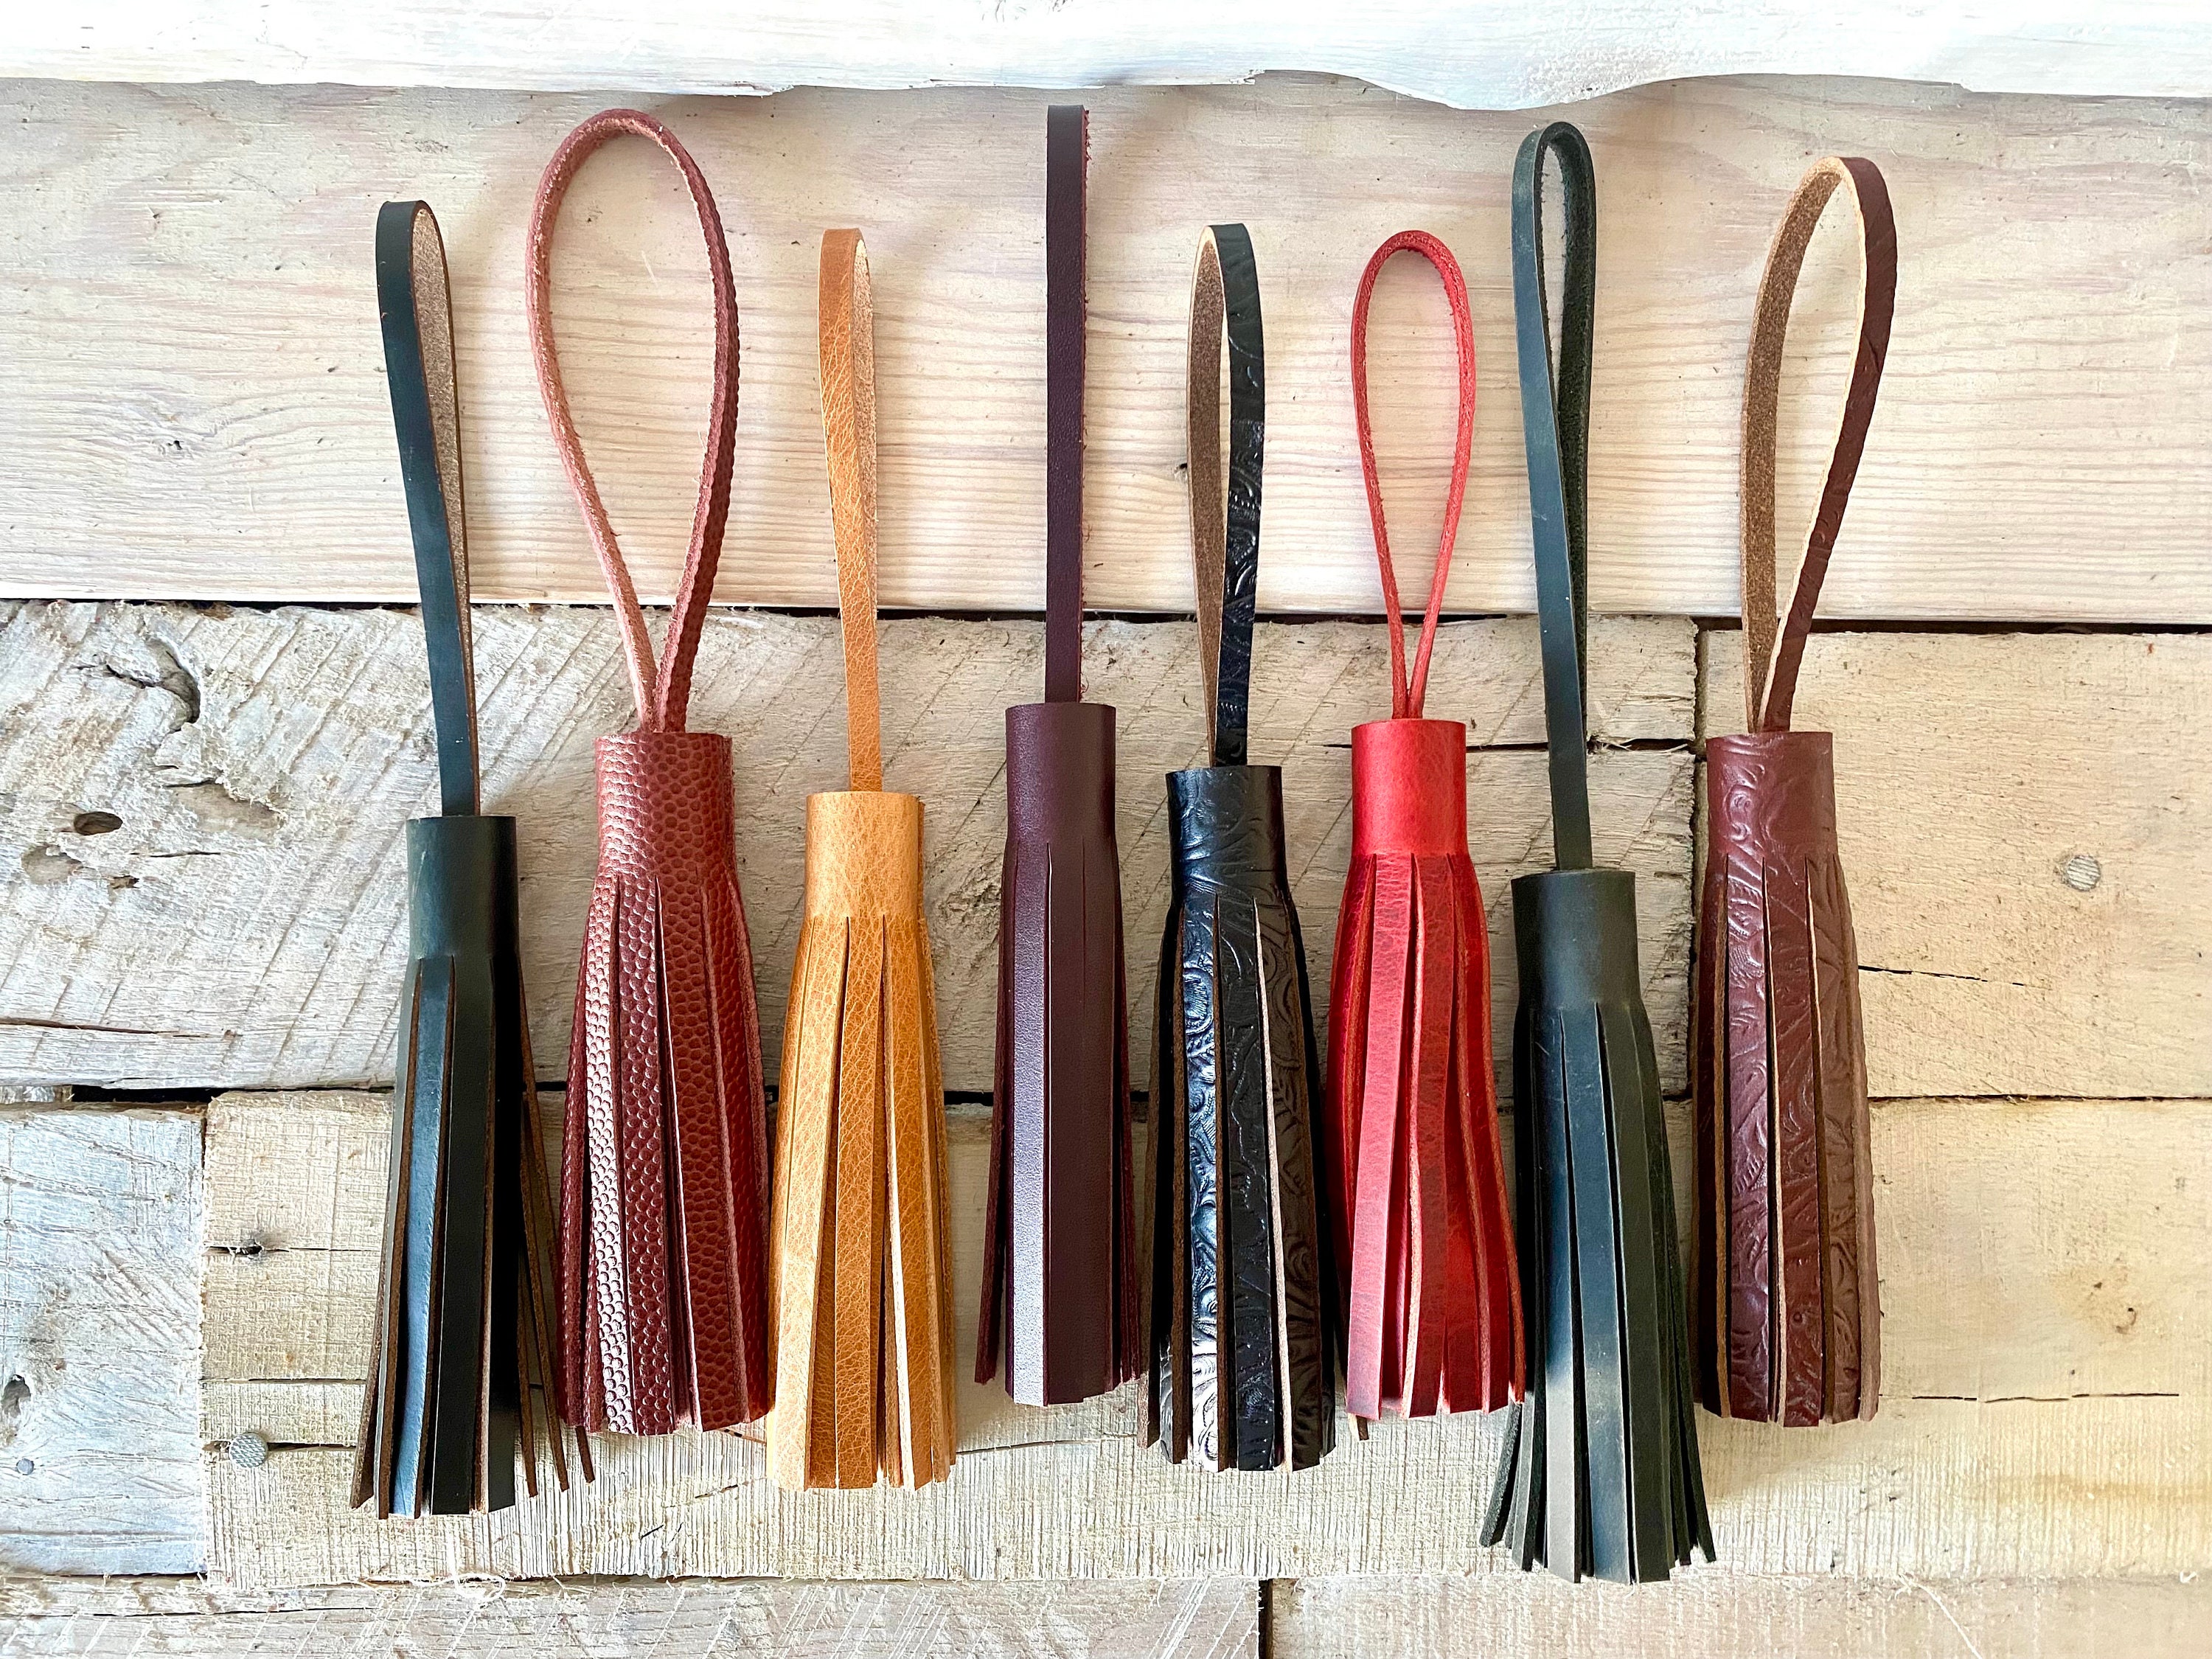 For sale! Bag is real leather and the tassels are real leather. # louisvuitton #louisvuittonrepurposed #tassel #tasselhandbag